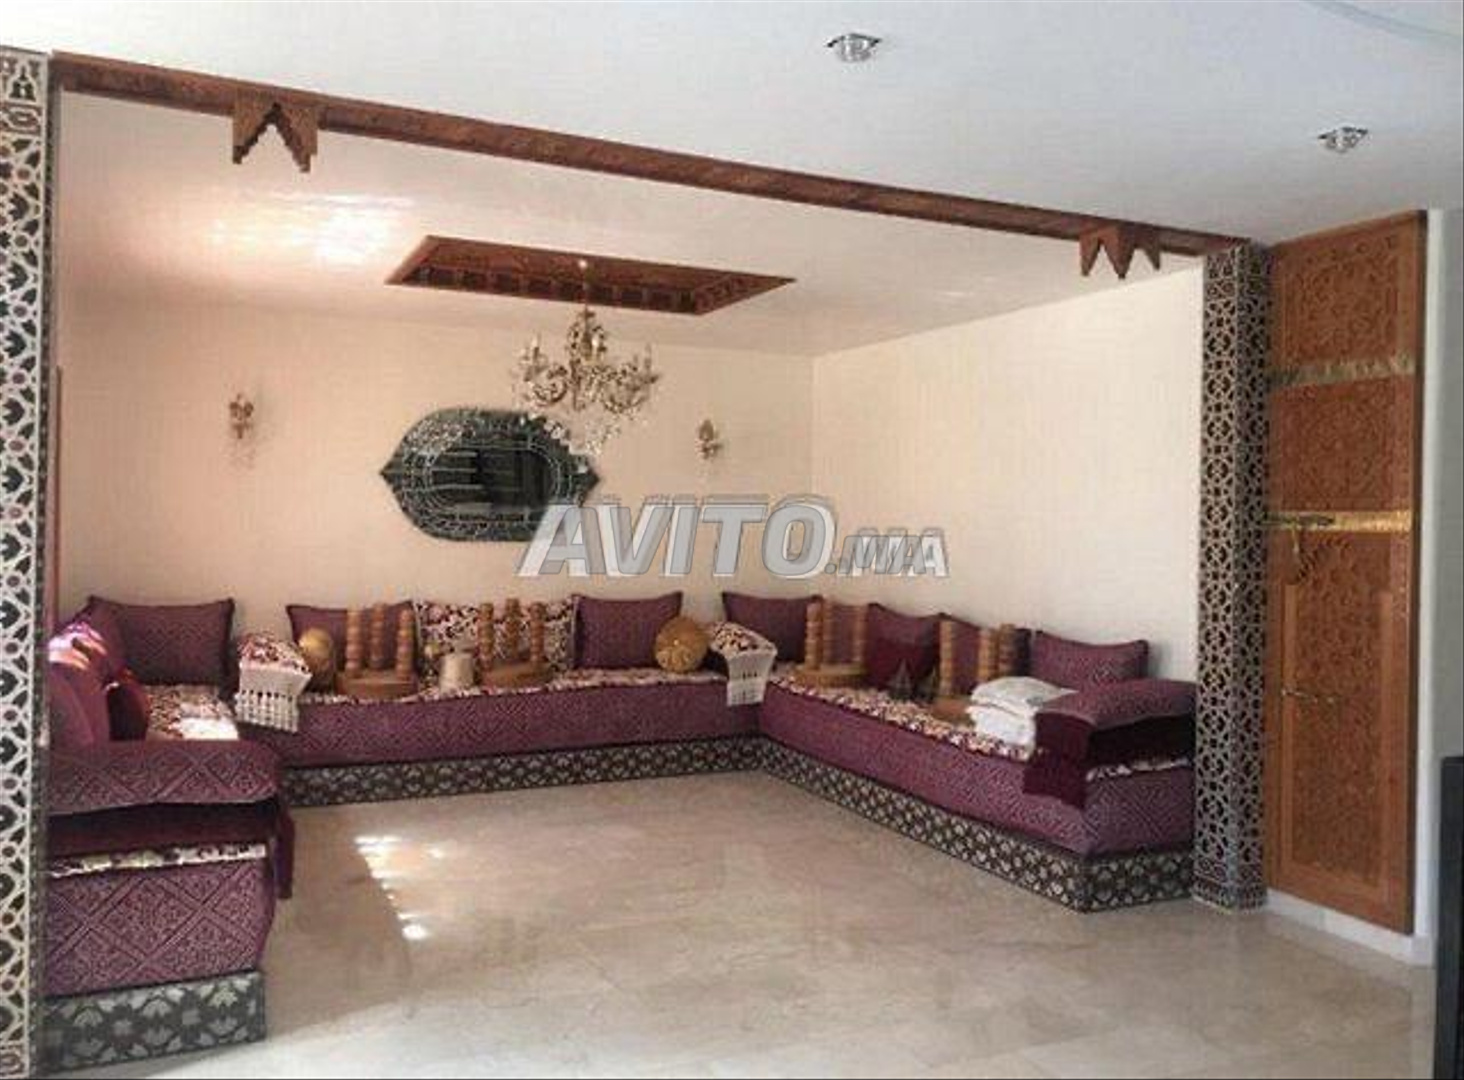 À vendre villa à ryad isly - 7